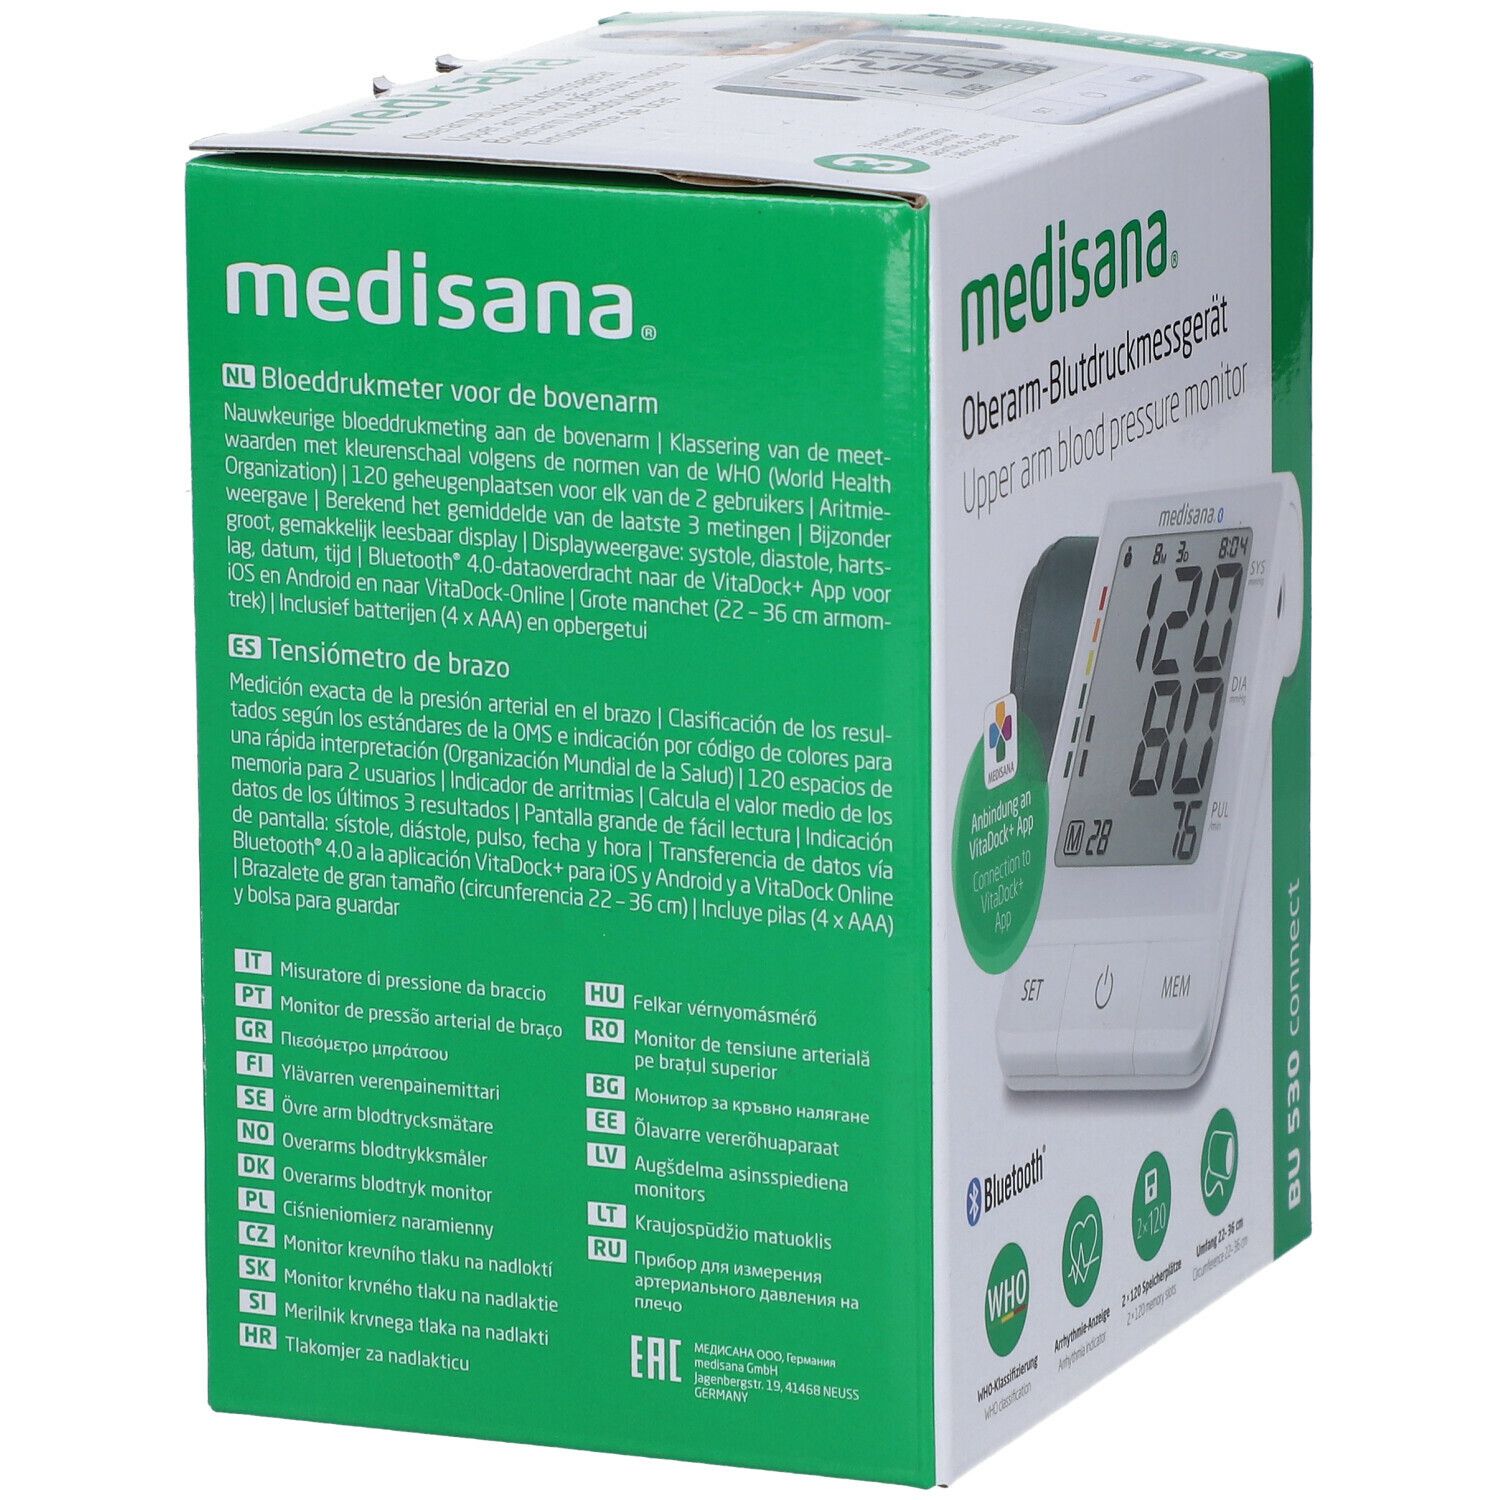 Medisana® Oberarm-Blutdruckmessgerät BU 530 connect